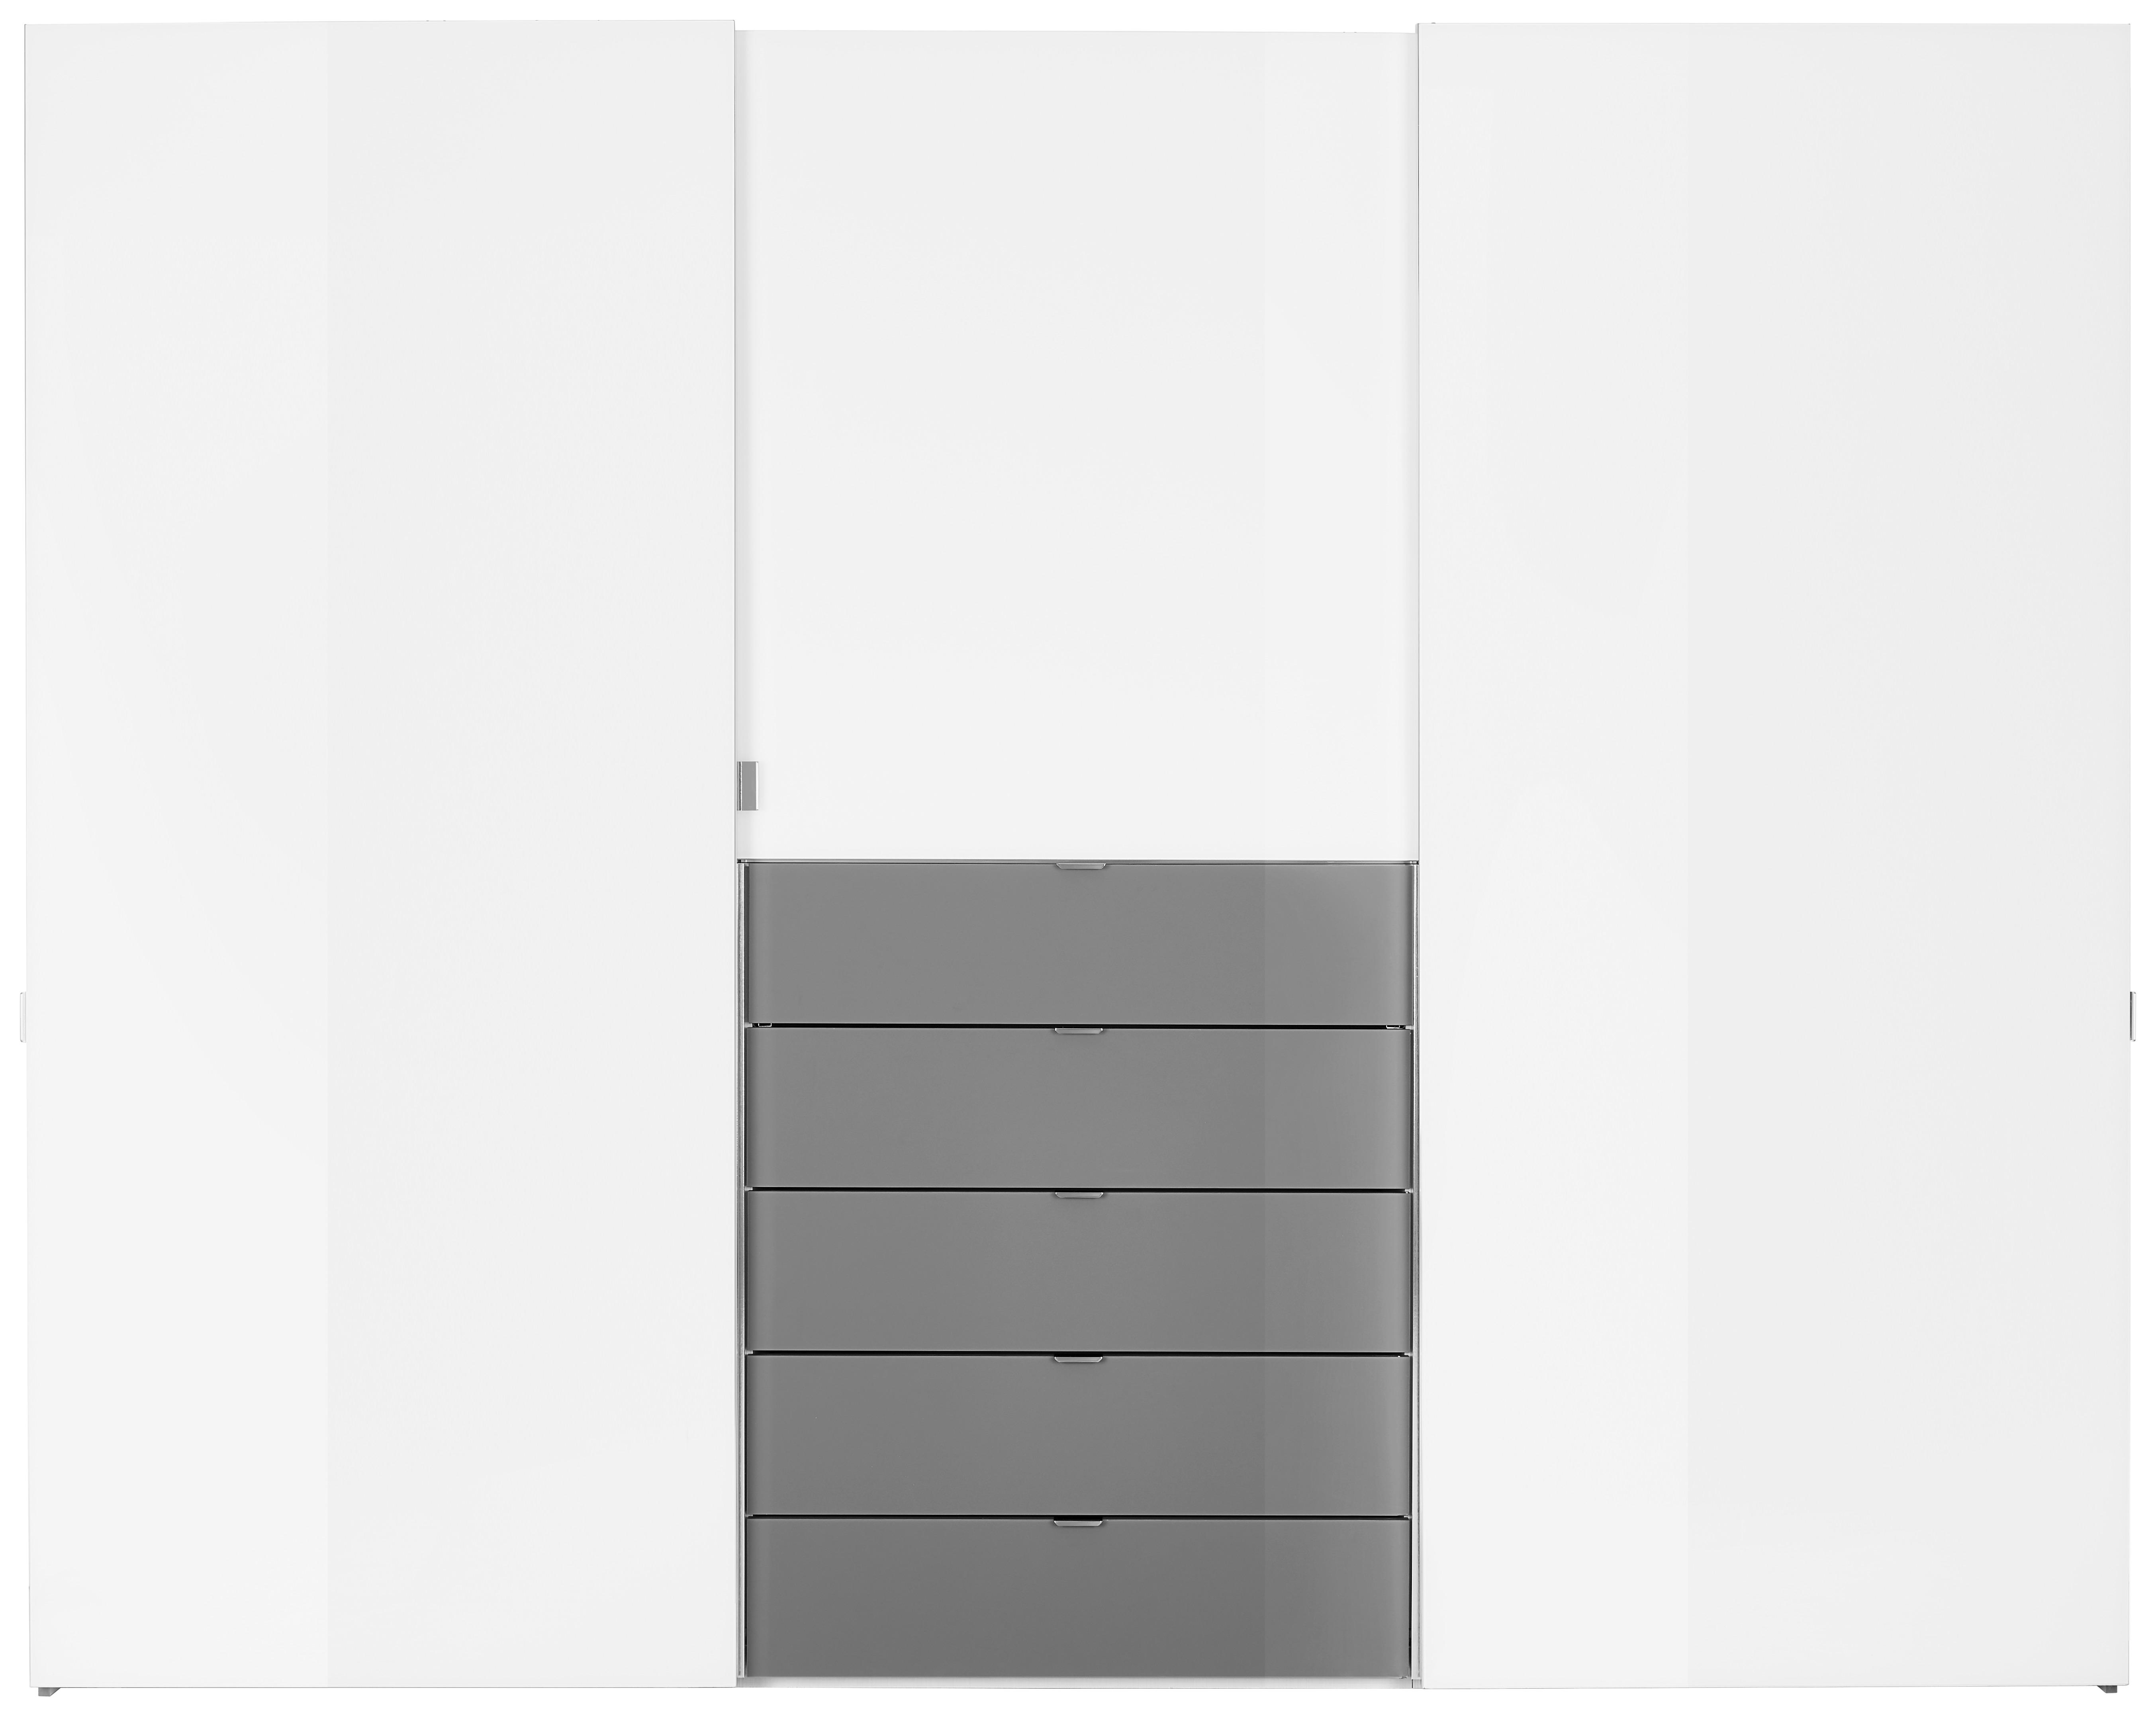 SKŘÍŇ S POSOUVACÍMI DVEŘMI, šedá, bílá, 298/240/68 cm - bílá/šedá, Design, kov/kompozitní dřevo (298/240/68cm) - Moderano